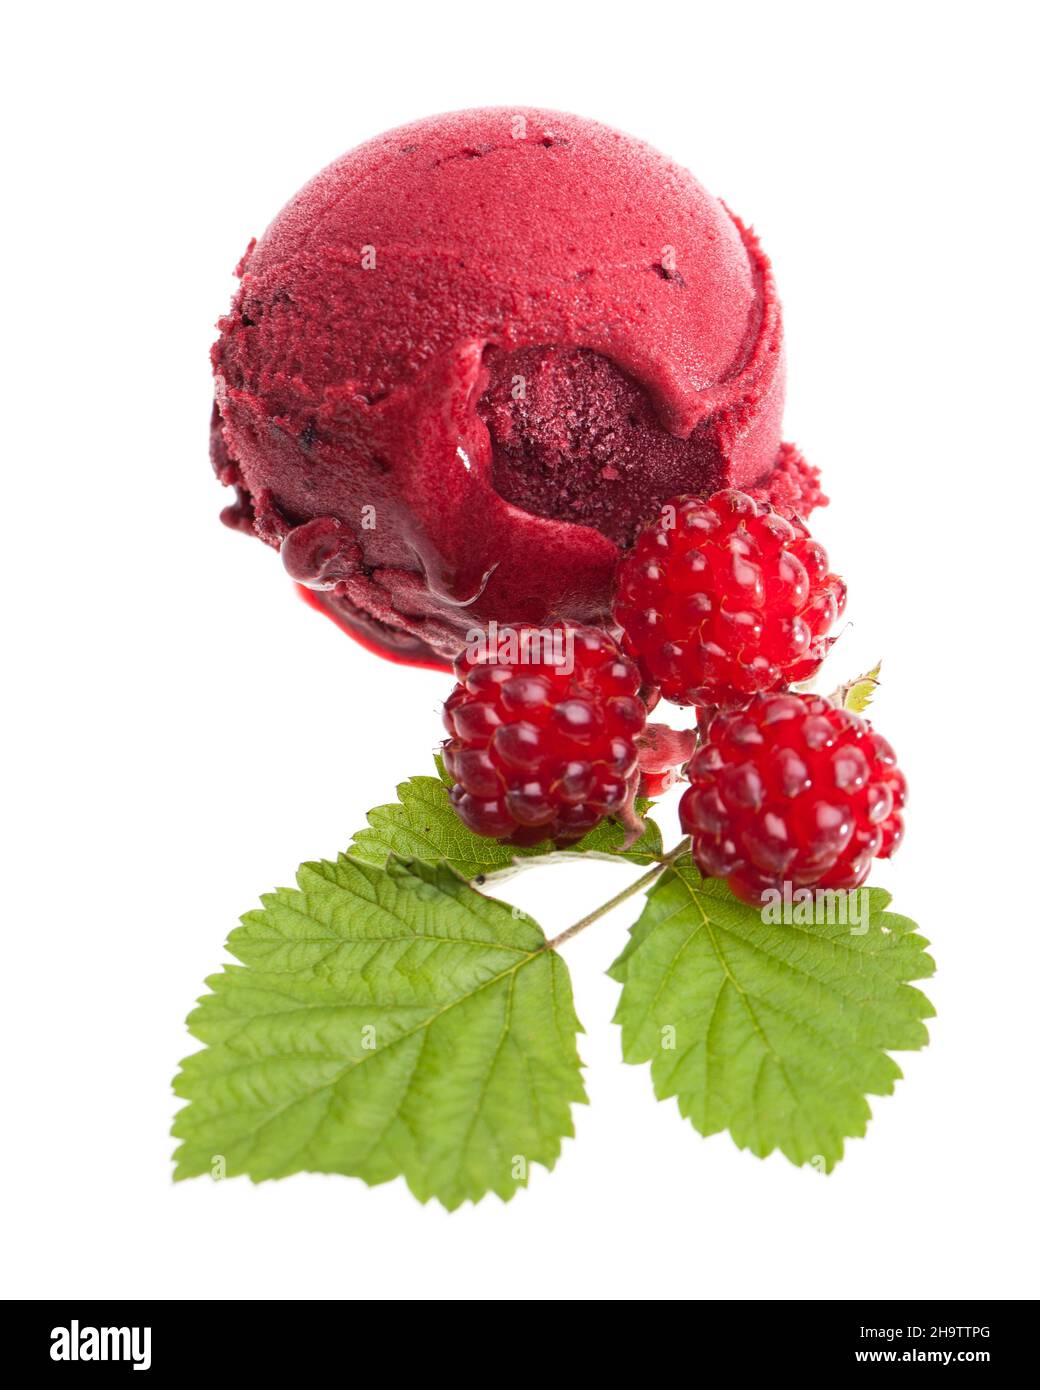 ice, raspberries, raspberry, fresh, sphere, fresh, fruit, Blueberry, food, red, background, white, berries, dark red, greens, leaves, cream, green, le Stock Photo